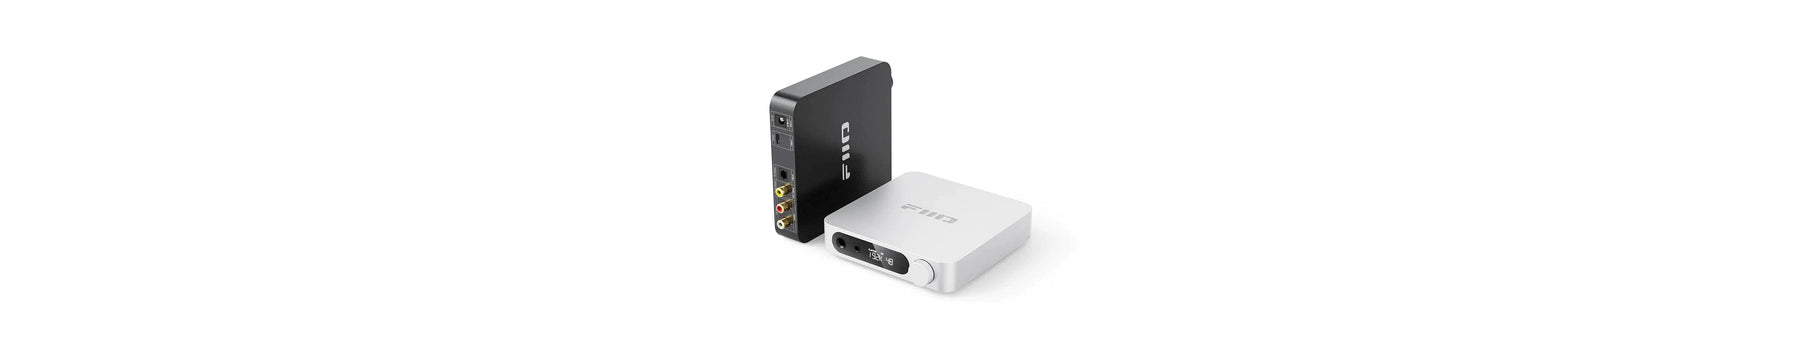 FiiO Introduces K11 High-Performance Desktop USB DAC/AMP & FF3S Upgraded Flathead Earbuds